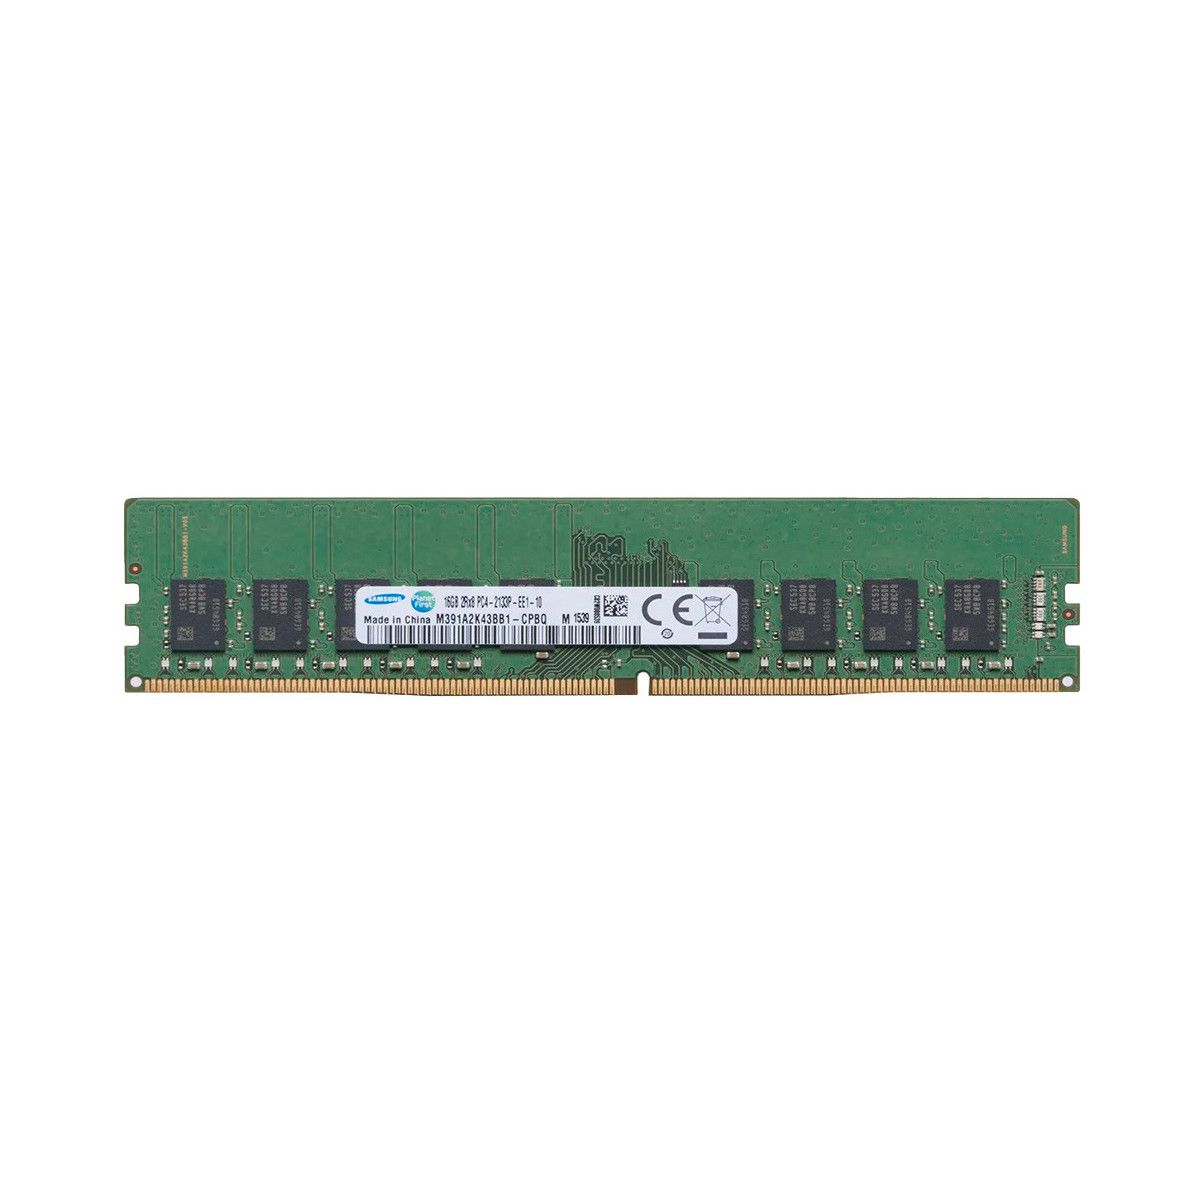 4X70M41718-MS - Memstar 1x 16GB DDR4-2133 ECC UDIMM PC4-17000P-E - Memorie OEM compatibilă cu Mem-Star 1 - Memstar 